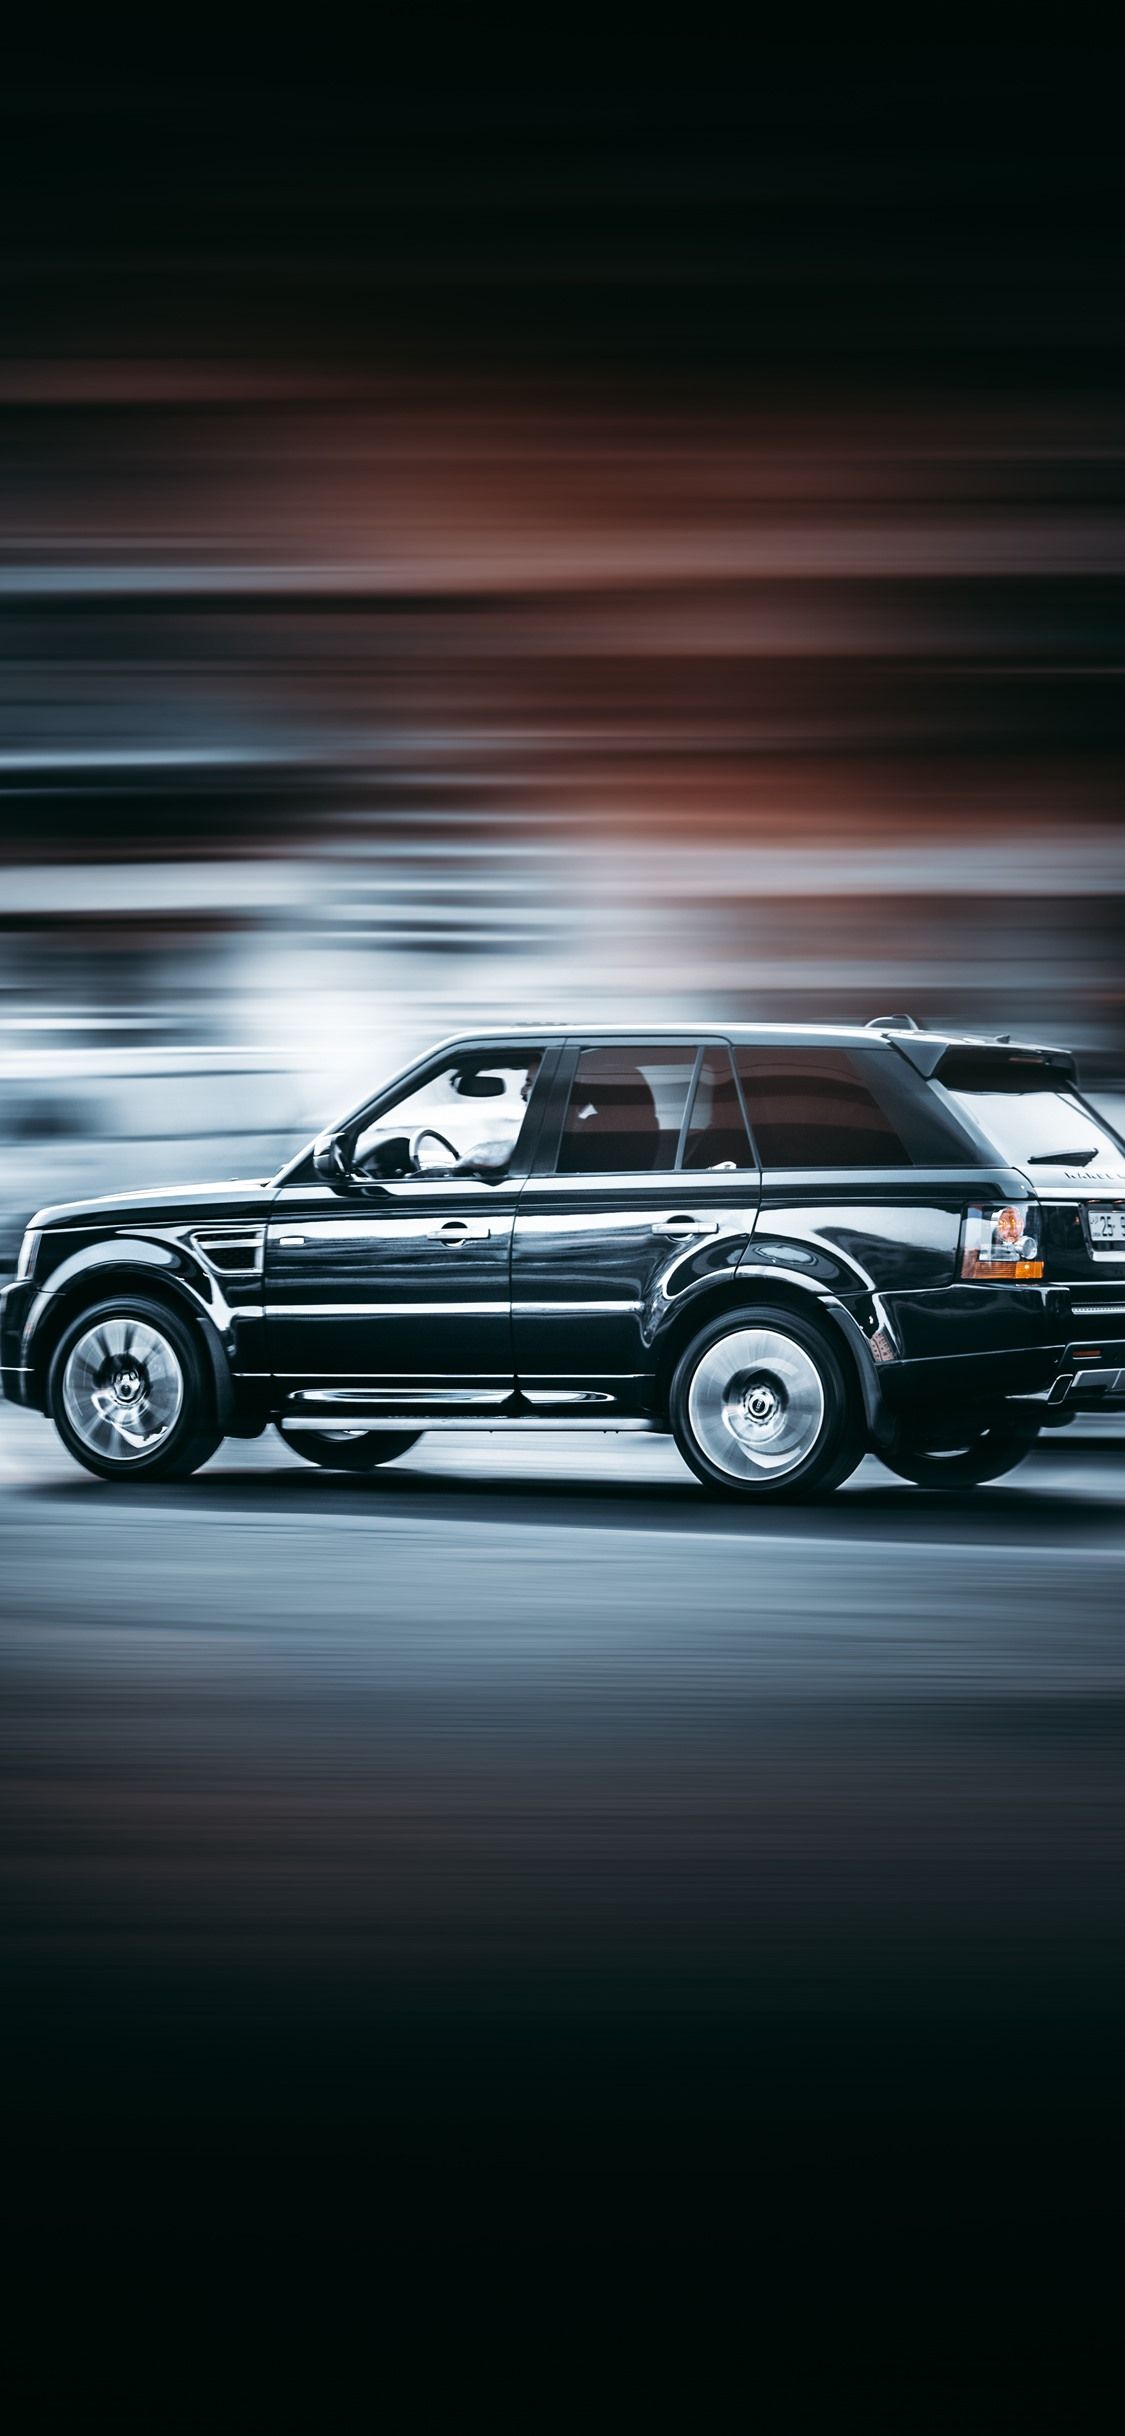 Wallpaper Range Rover black SUV car side view, speed 5120x2880 UHD